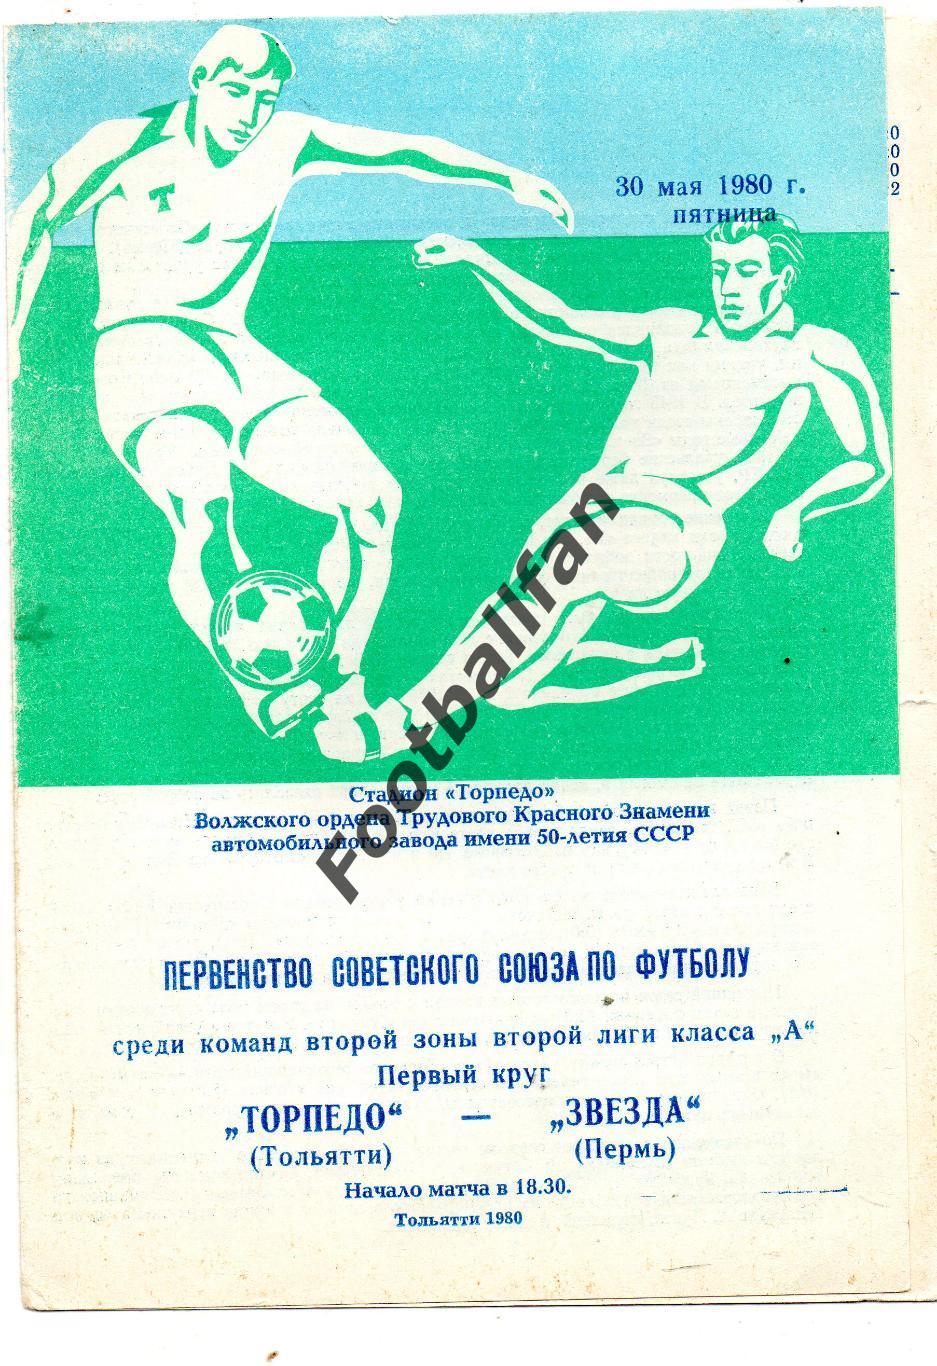 Торпедо Тольятти - Звезда Пермь 30.05.1980